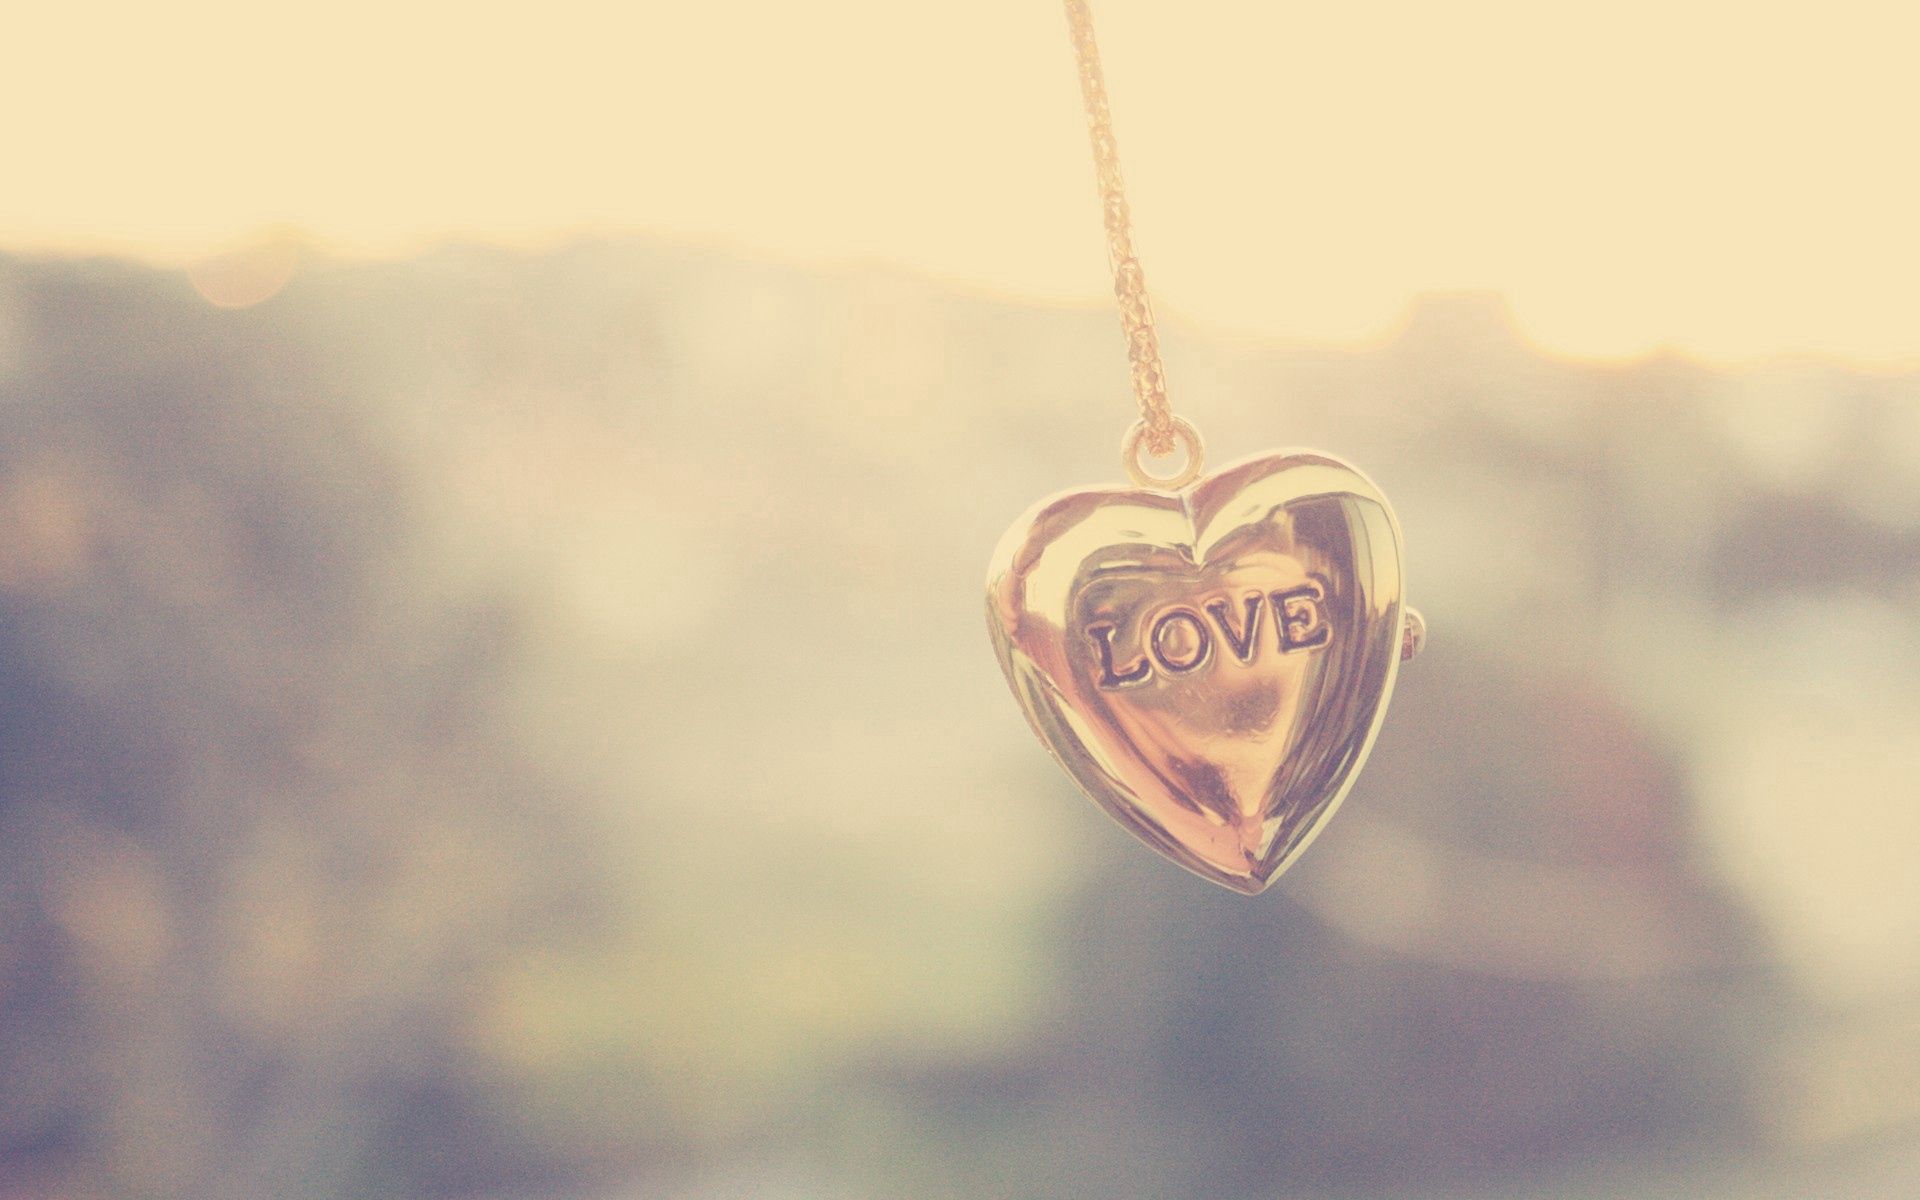 love, shine, light, suspension, heart, chain